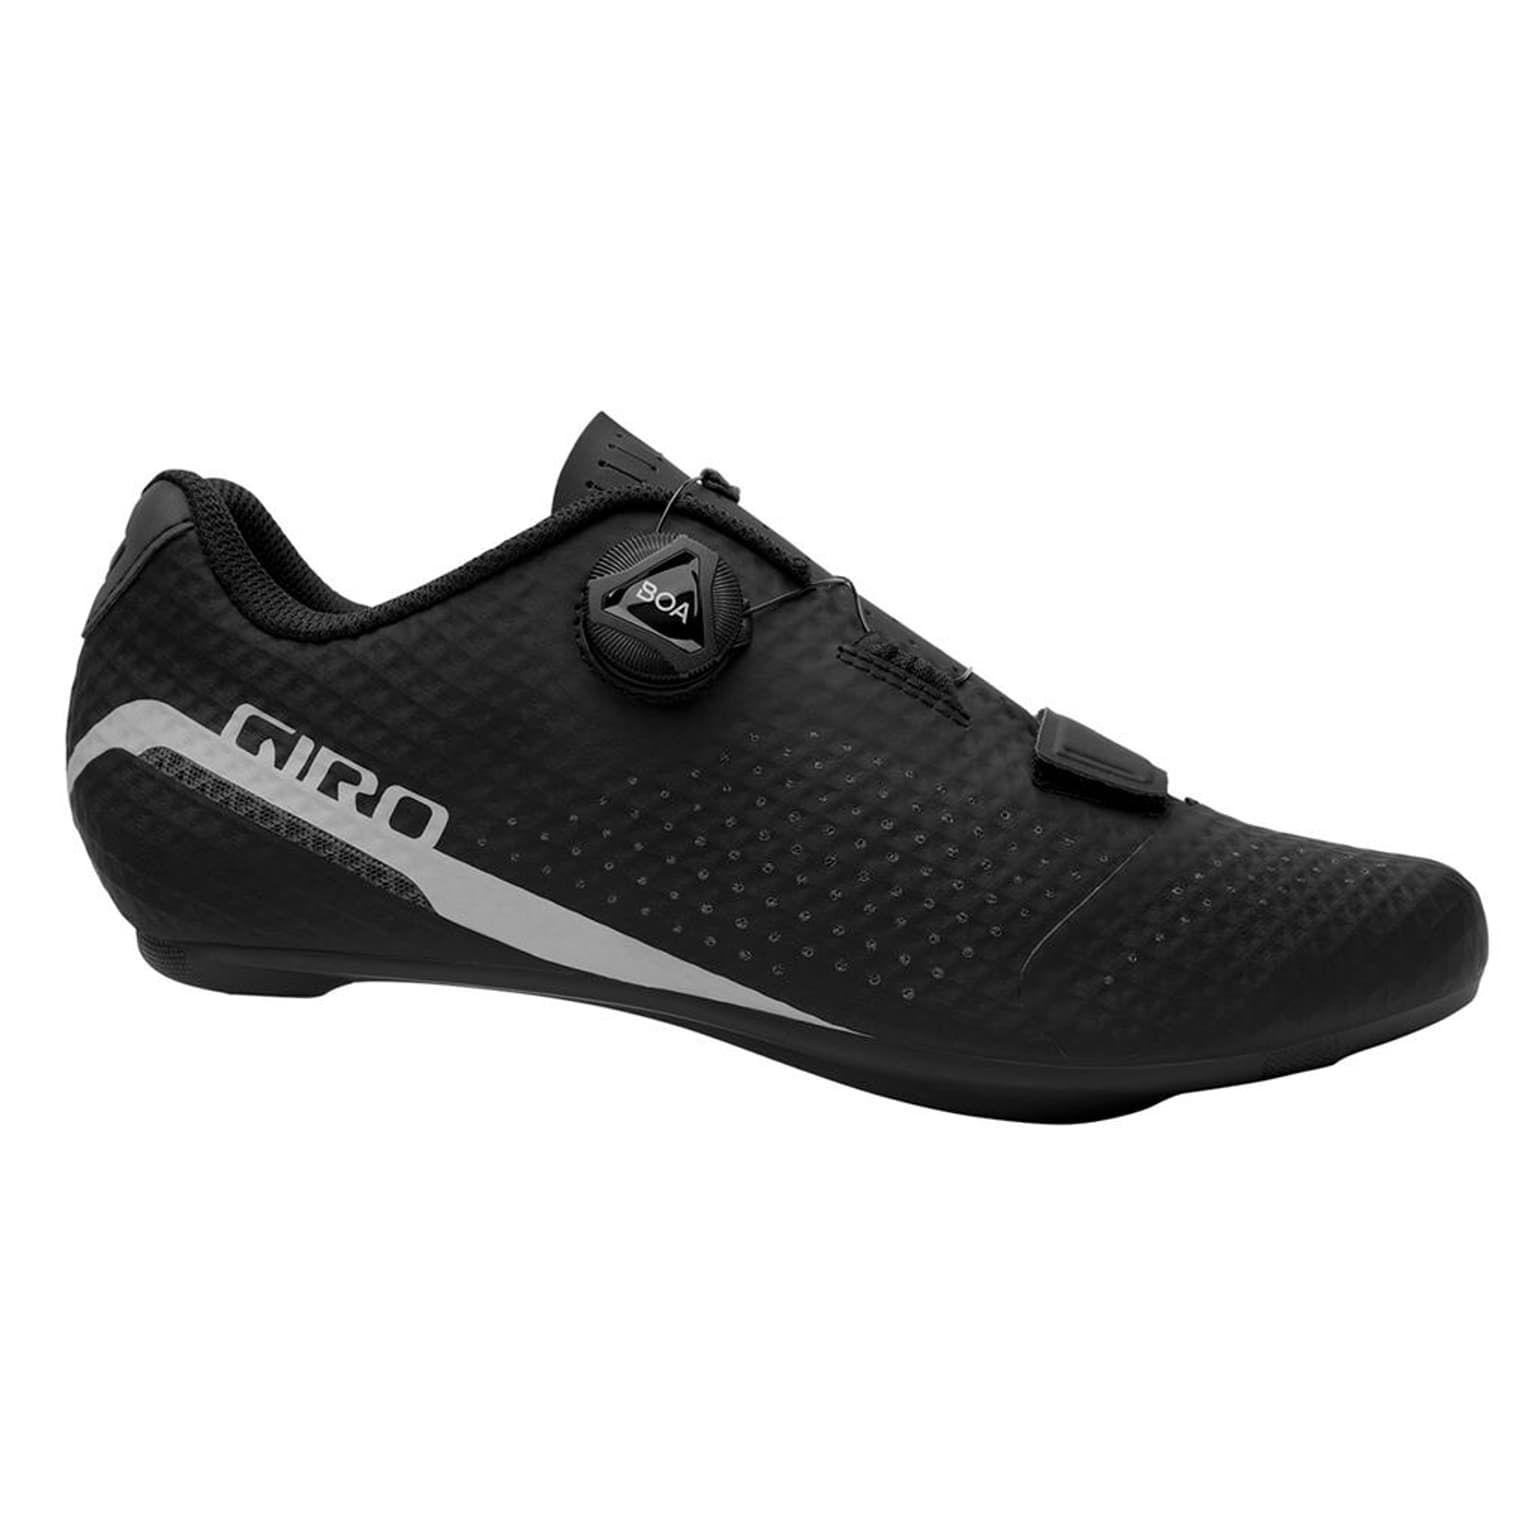 Giro Giro Cadet Shoe Chaussures de cyclisme noir 1